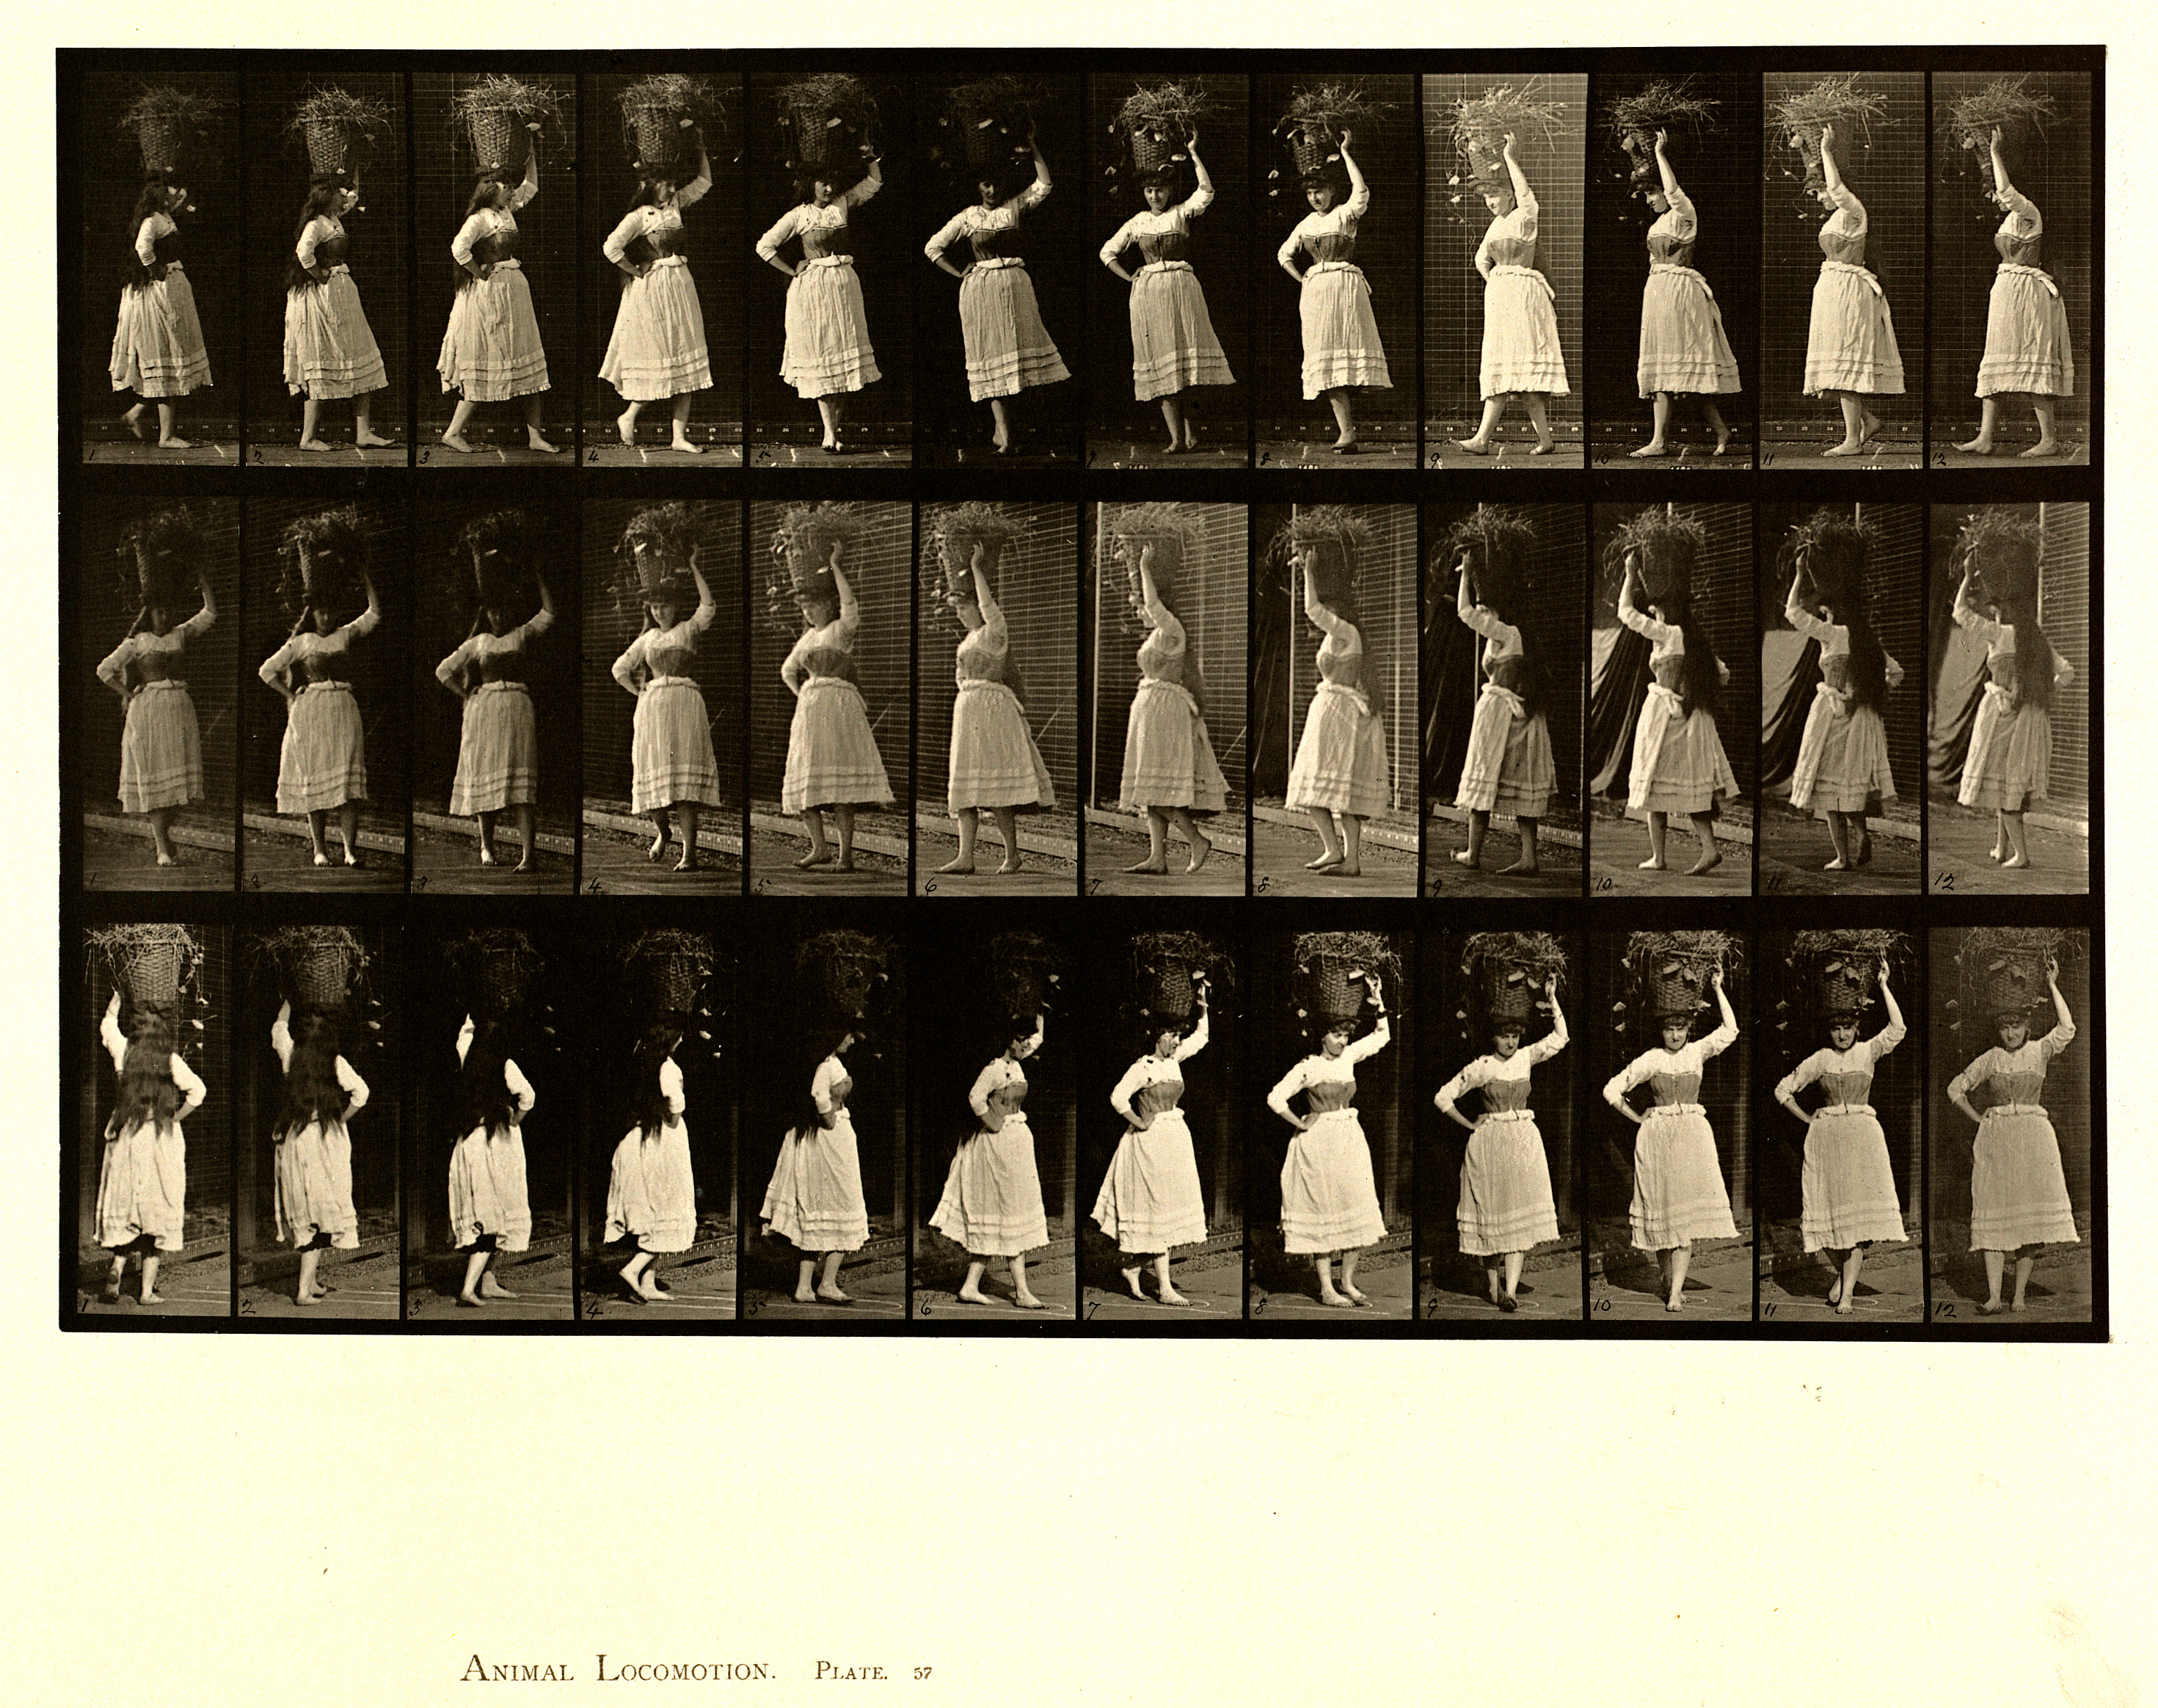 Animal locomotion. Plate 57 (Boston Public Library)